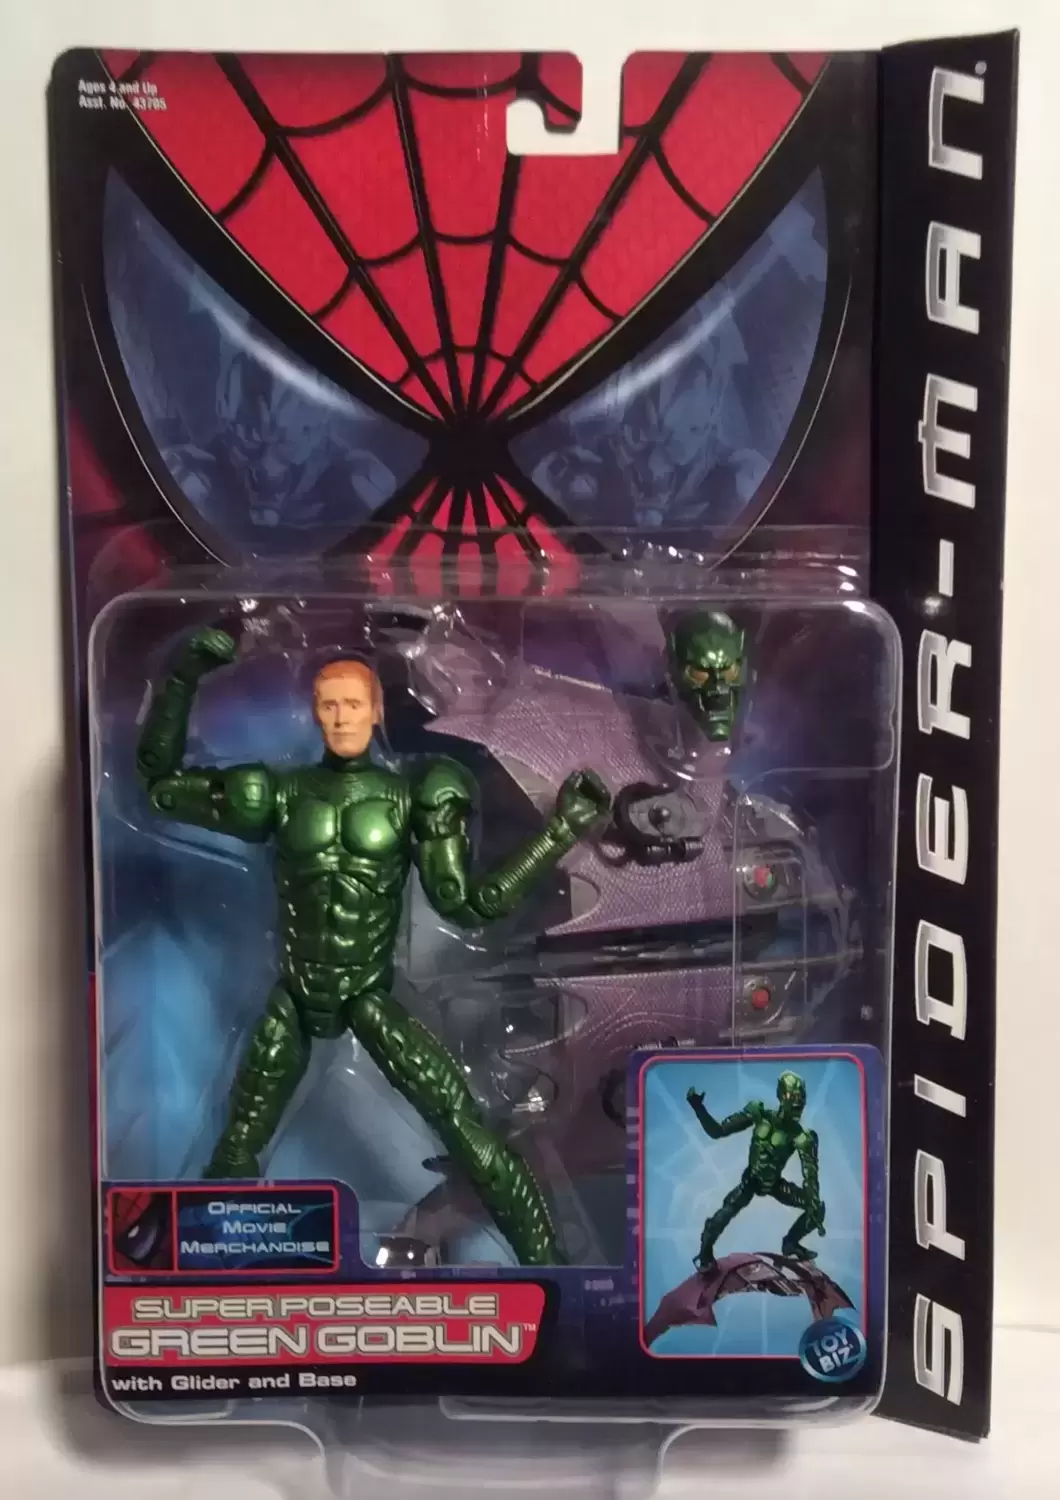 Spider-Man - Super Poseable Green Goblin - Spider-Man action figure